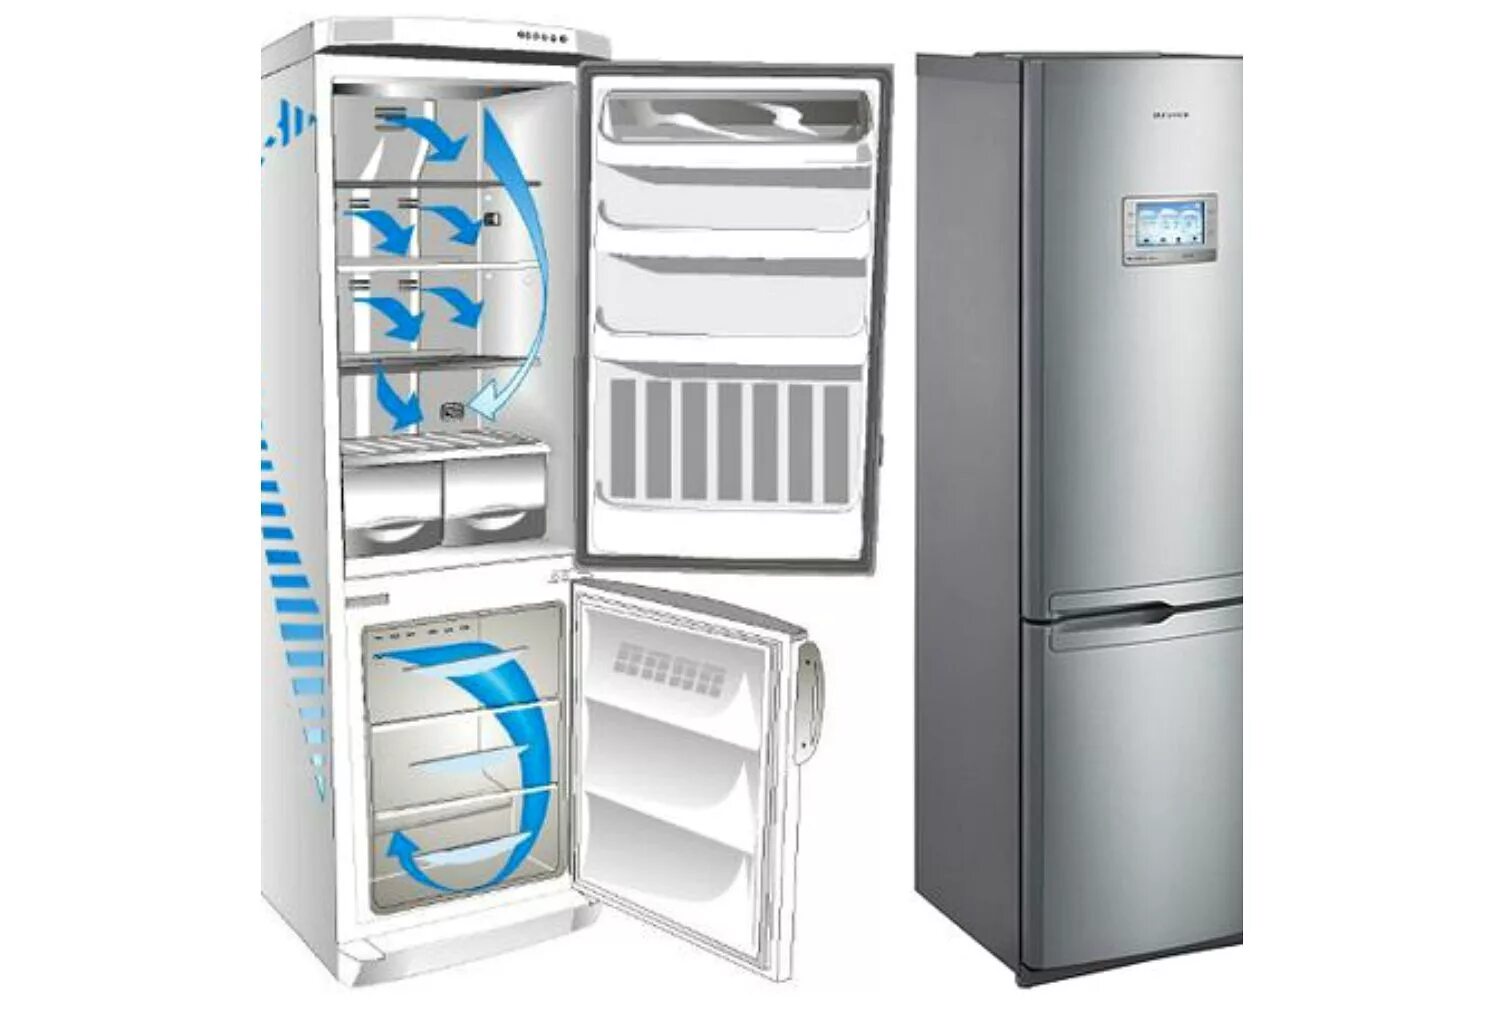 Размораживание холодильника no frost